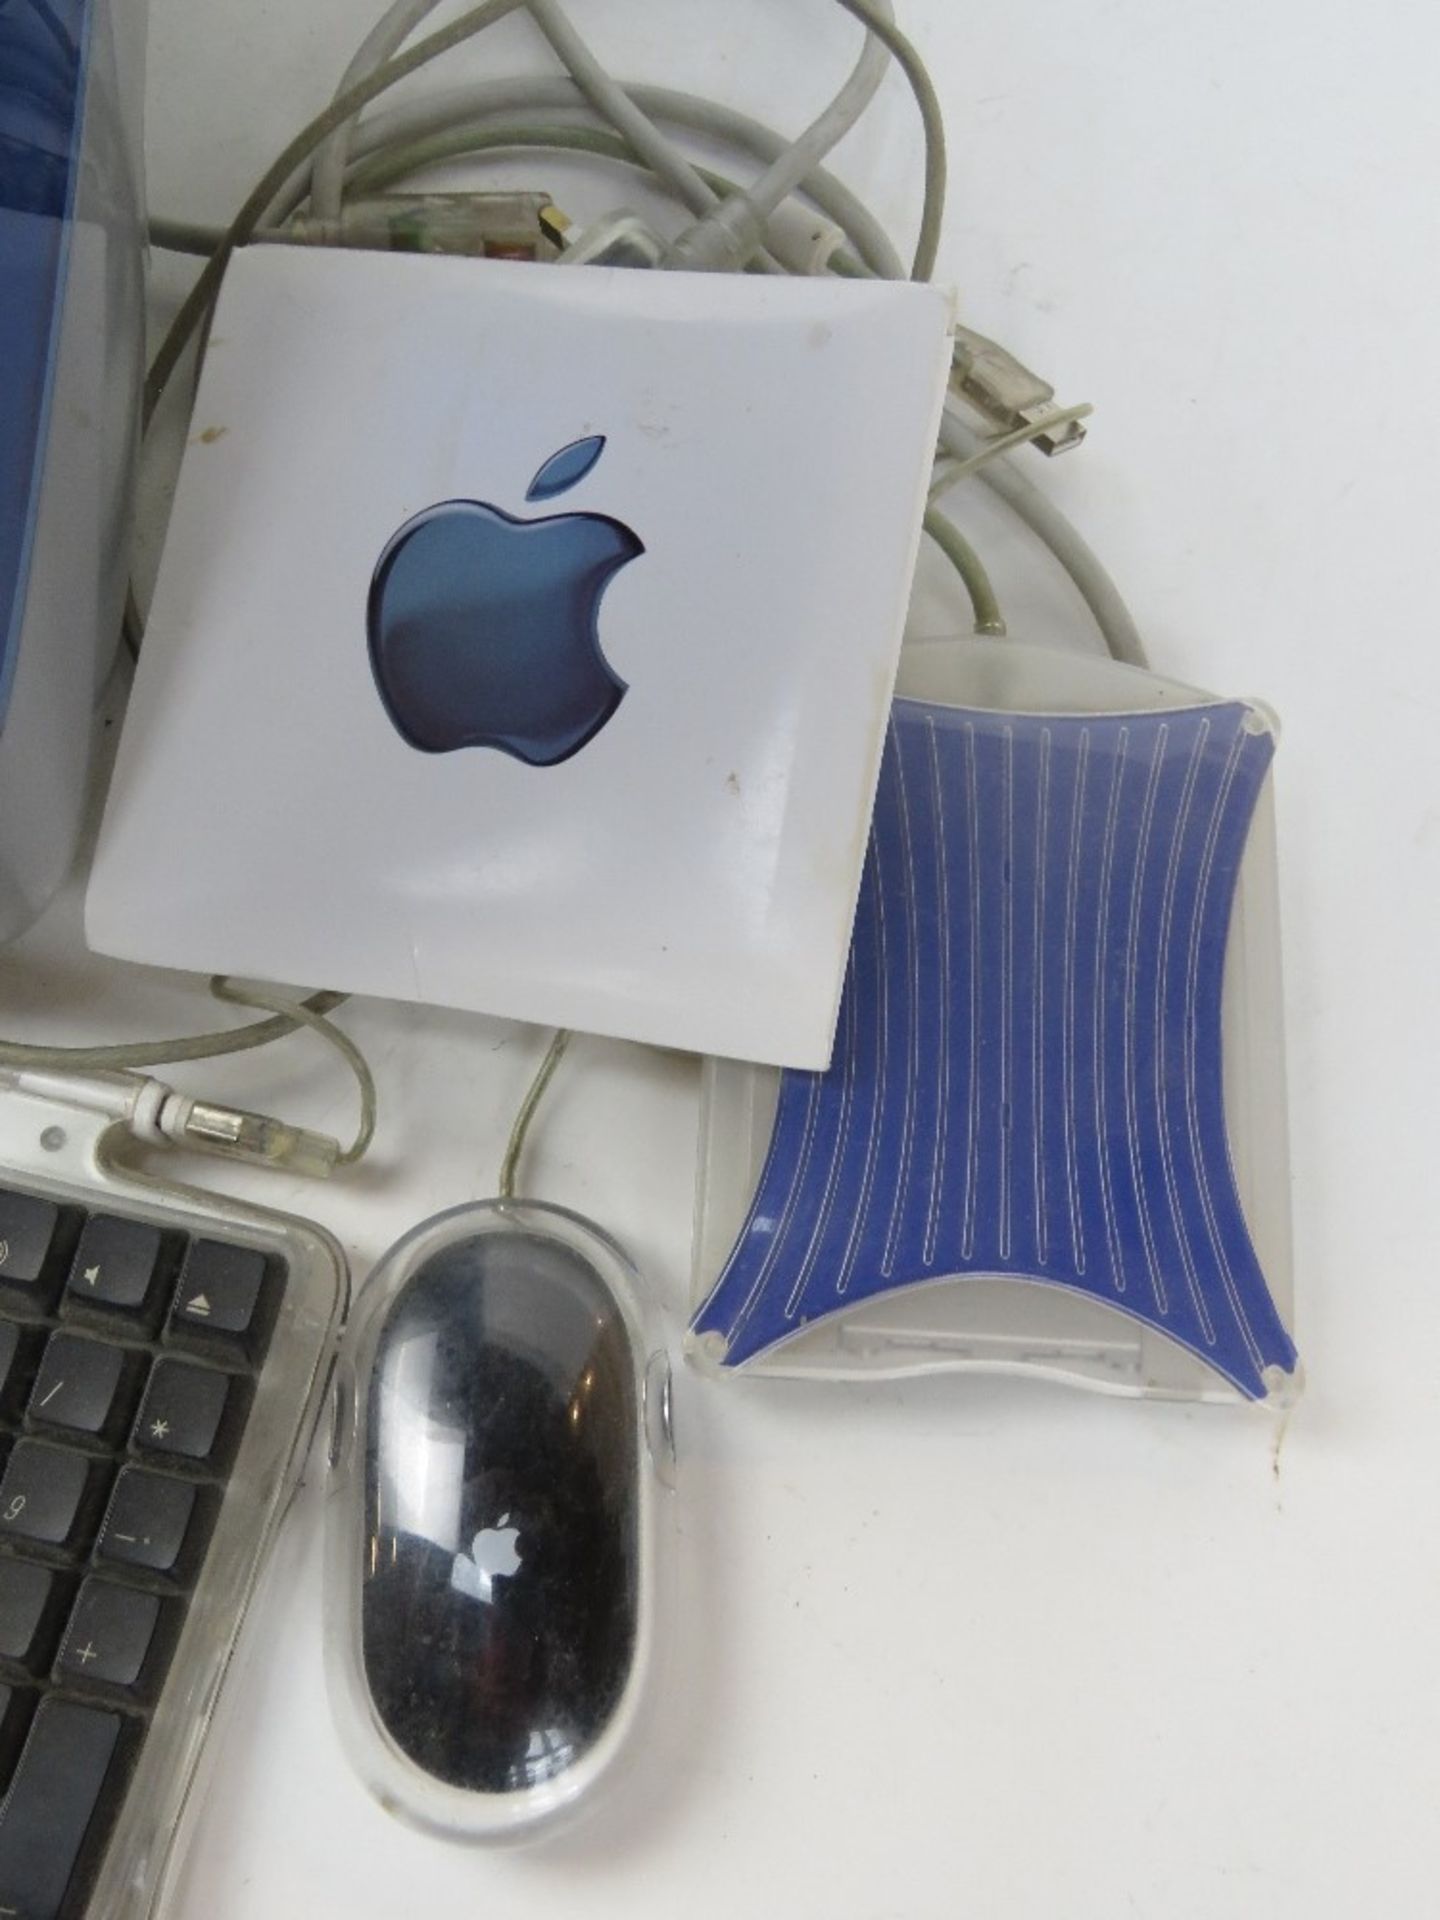 An Apple iMac desktop computer. - Image 2 of 2